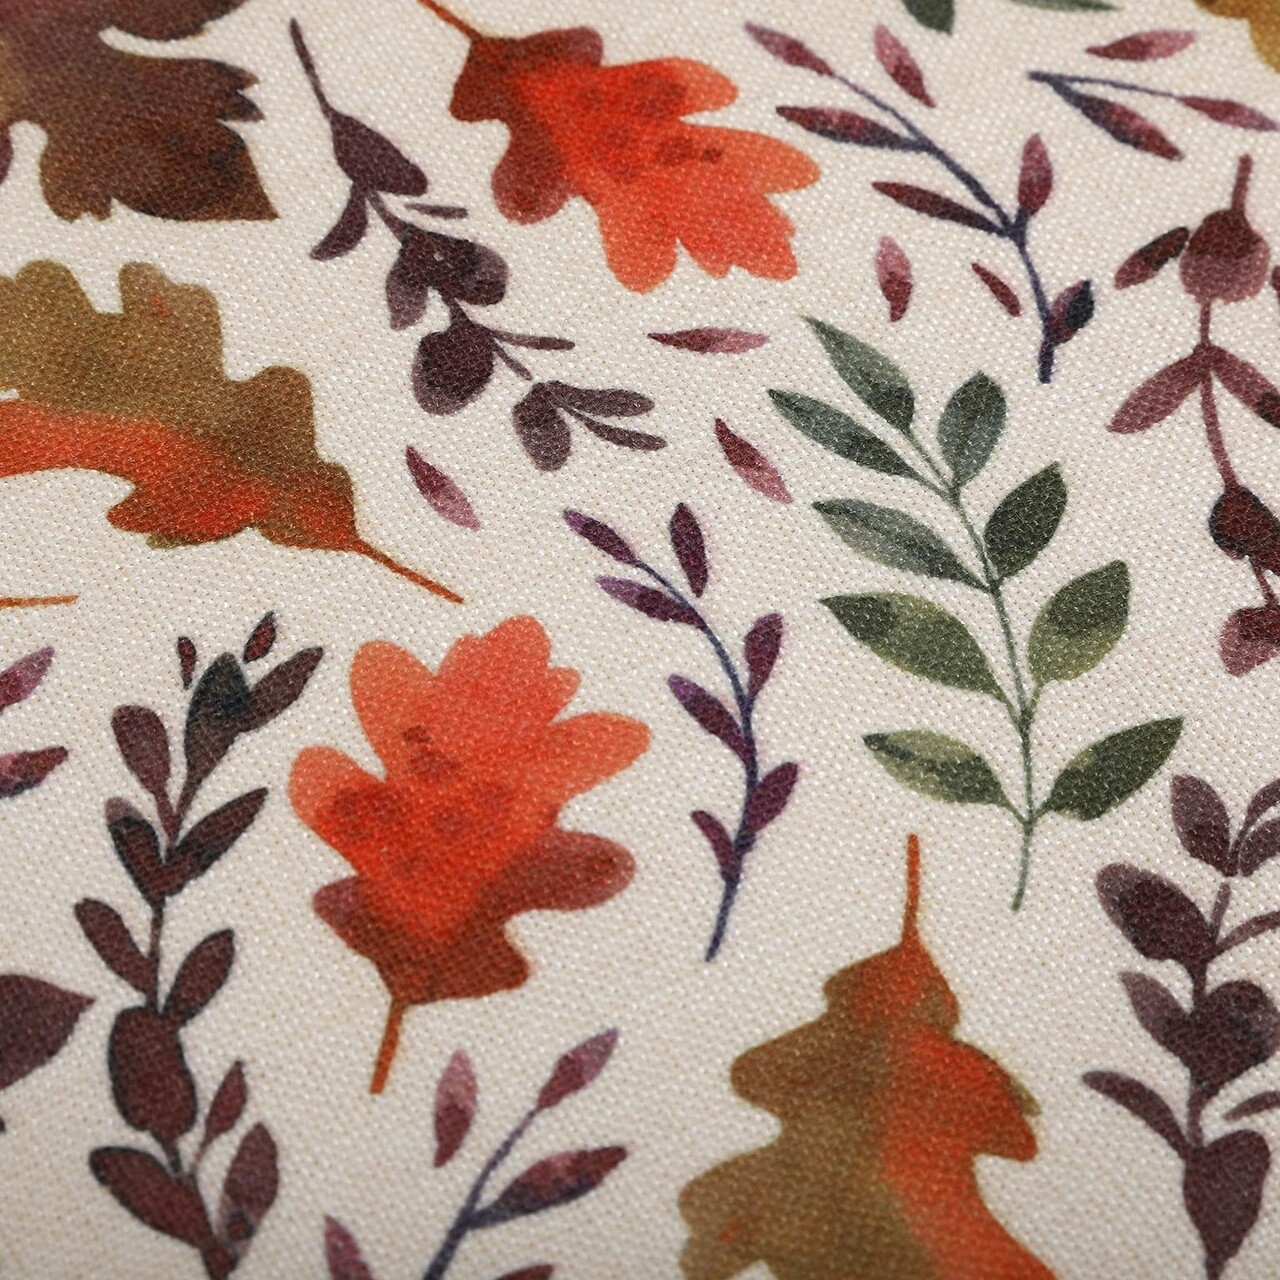 Suport pentru farfurie Aya Leaves, Versa, 36 x 48 cm, poliester